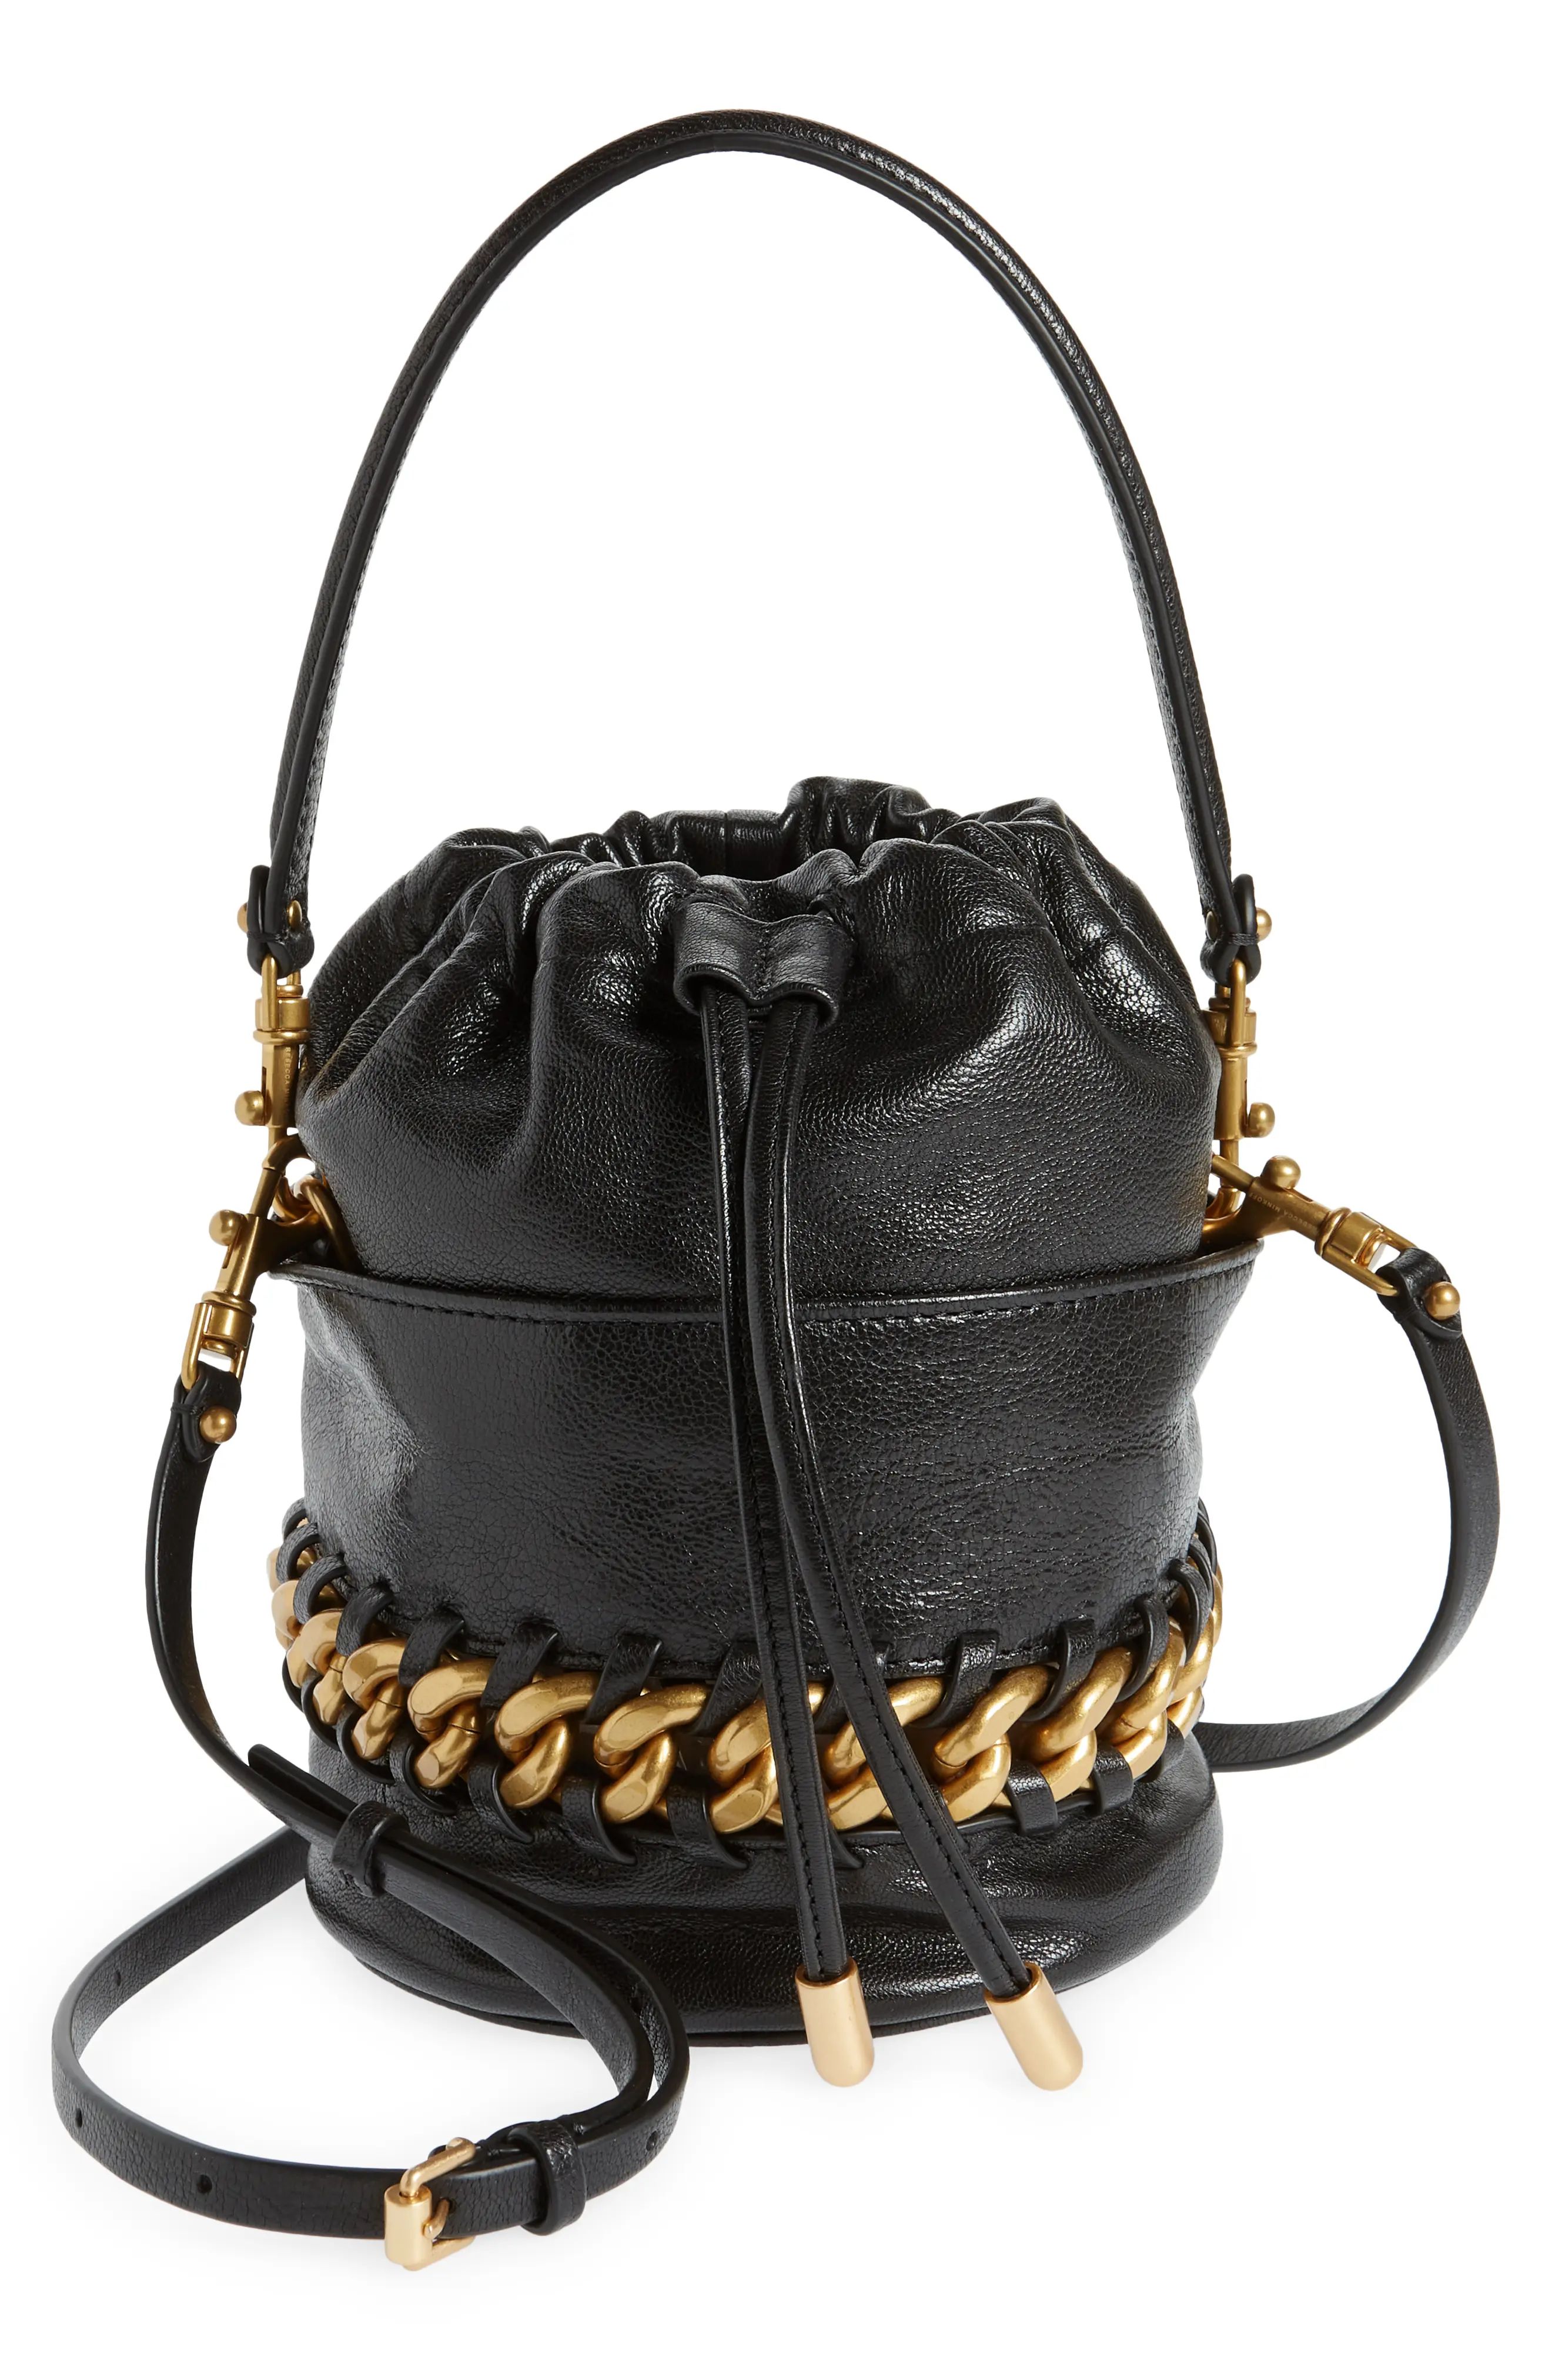 Rebecca Minkoff Chain Bucket Leather Handbag in Black at Nordstrom | Nordstrom